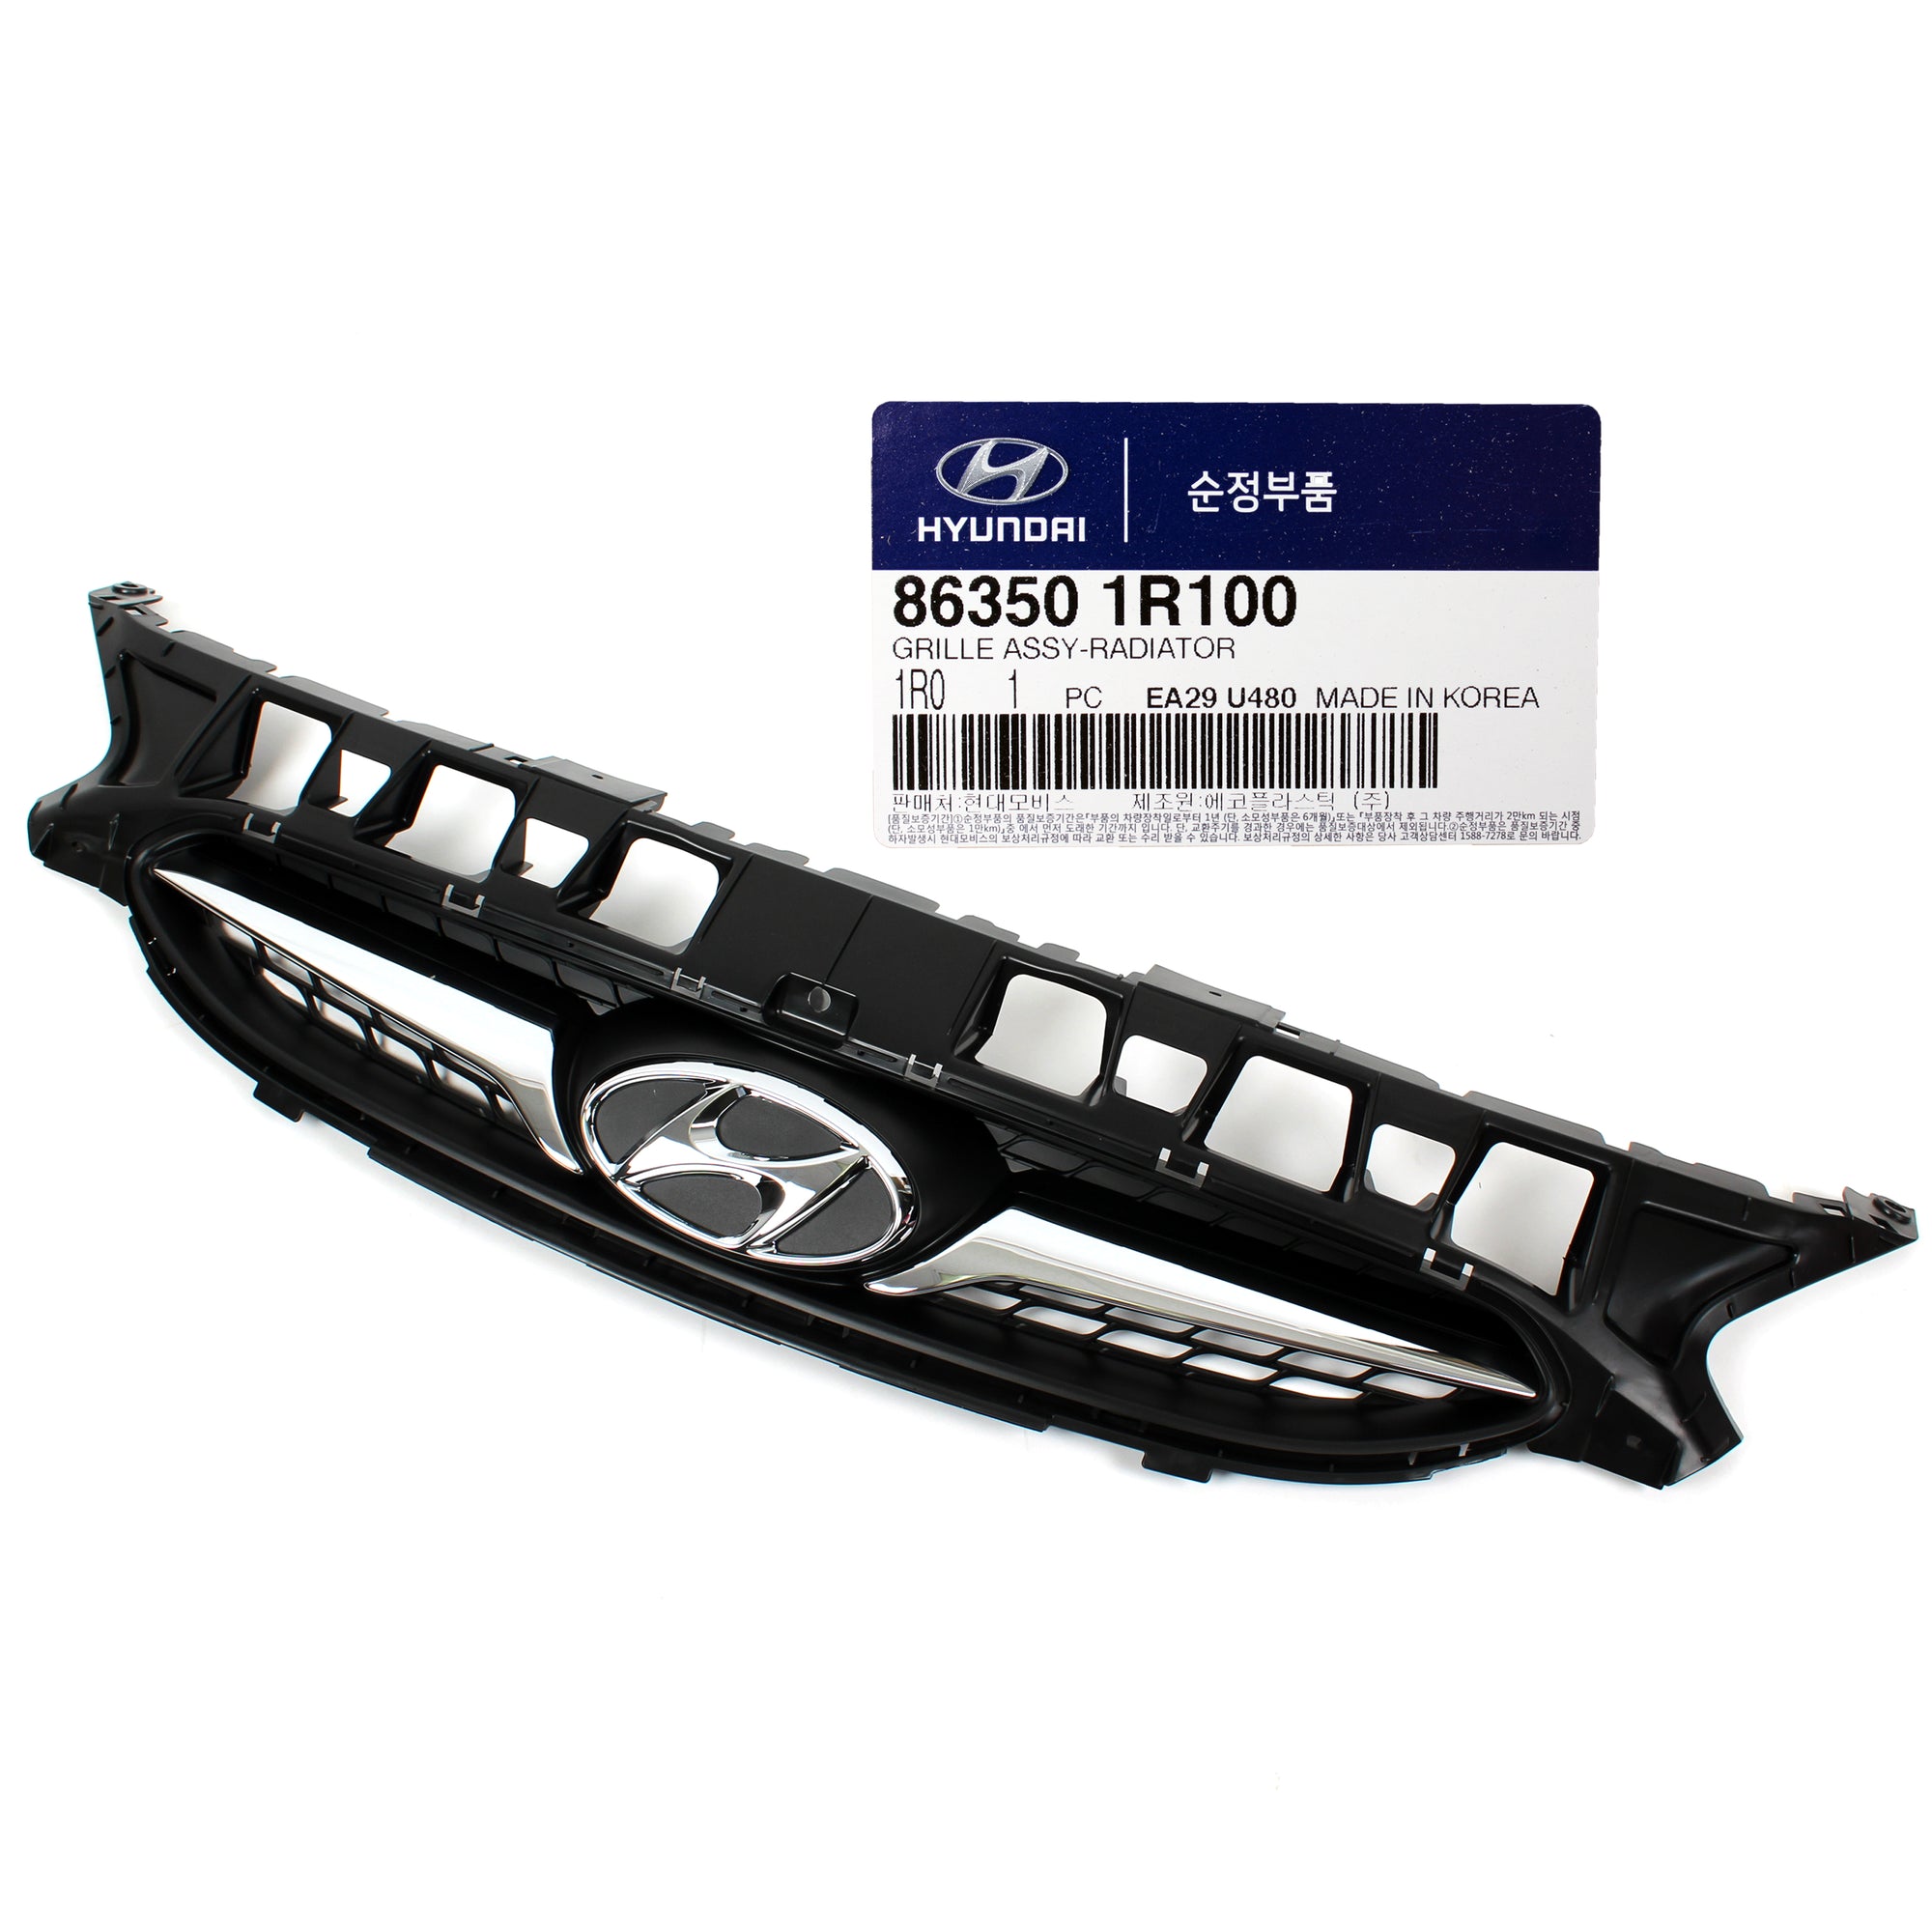 GENUINE Radiator Grille Set 3PCS for 2012-2014 Hyundai Accent OEM 863501R100